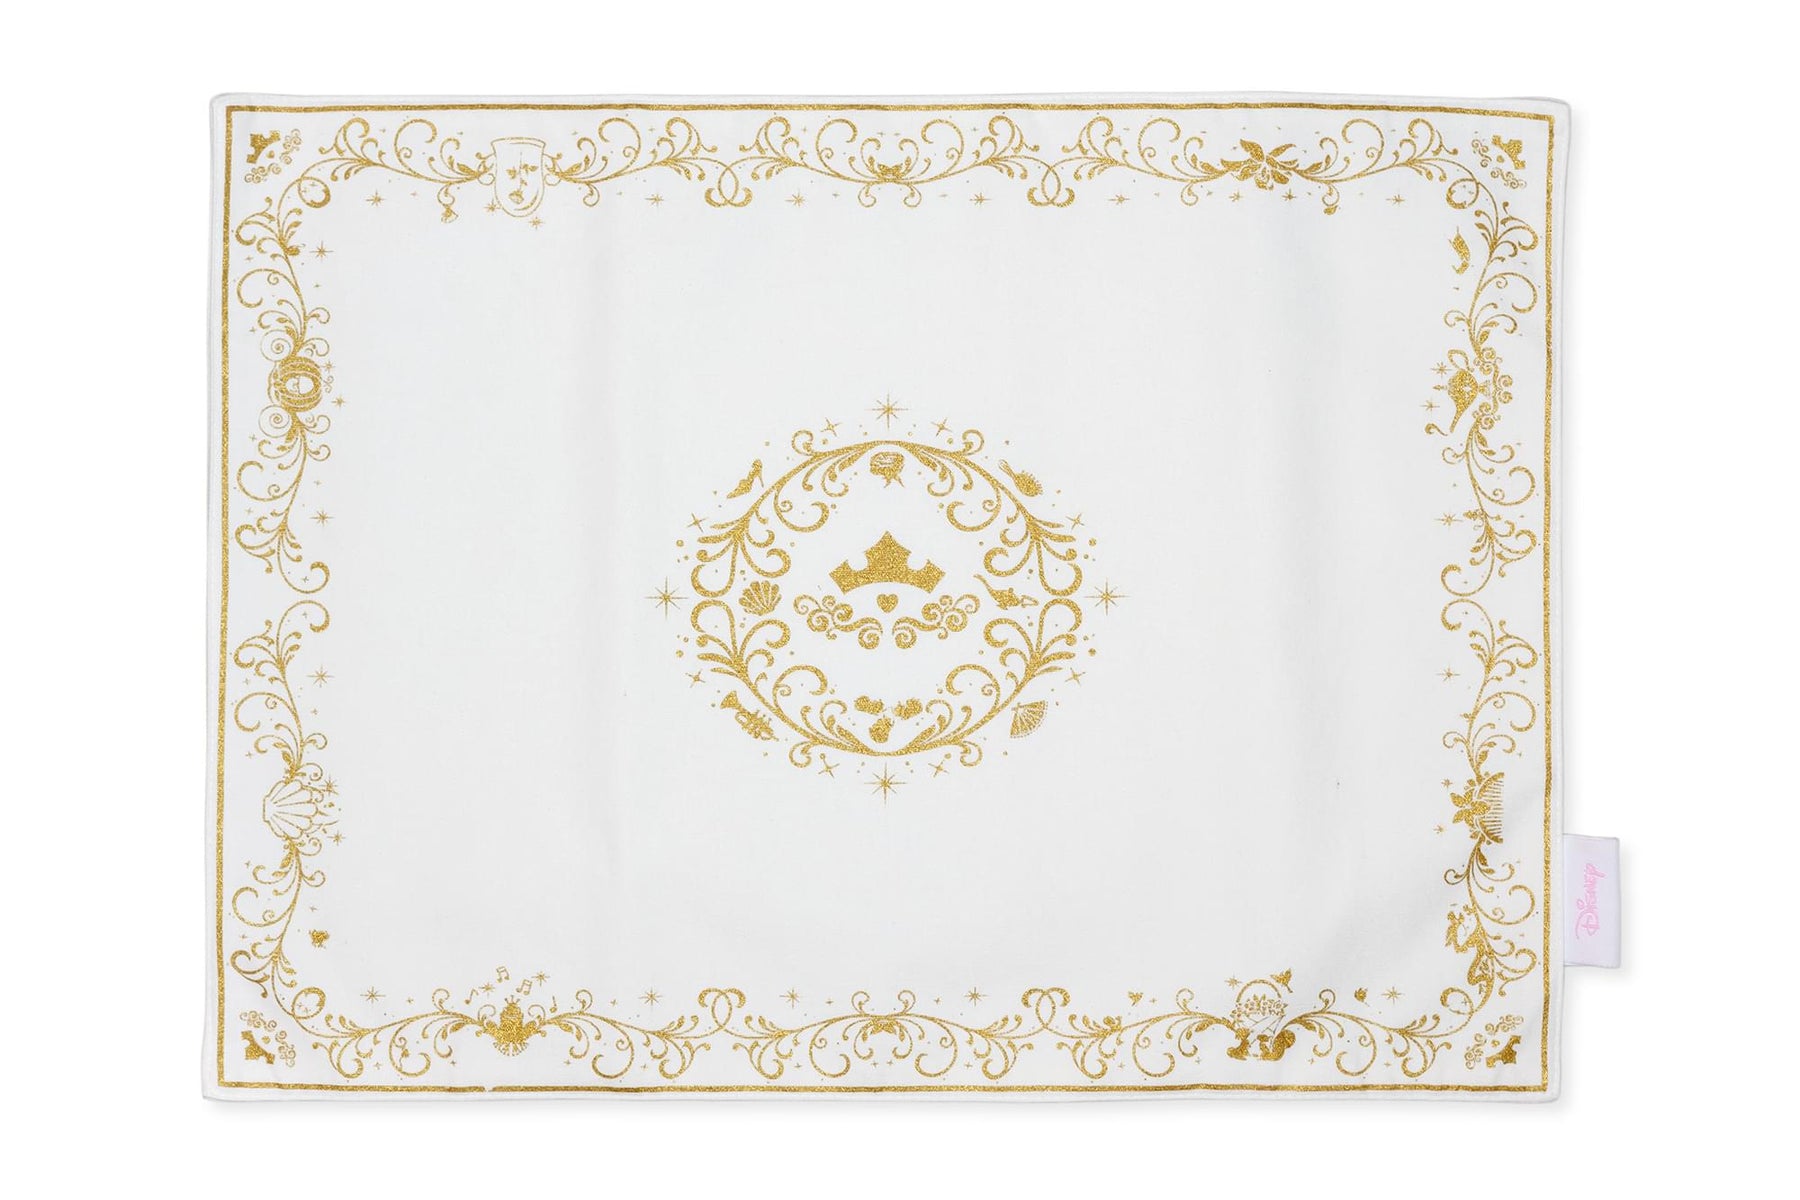 Disney Princess Cotton Placemat Set | Set Of 4 18 x 14 Inch Cotton Fabric Mats